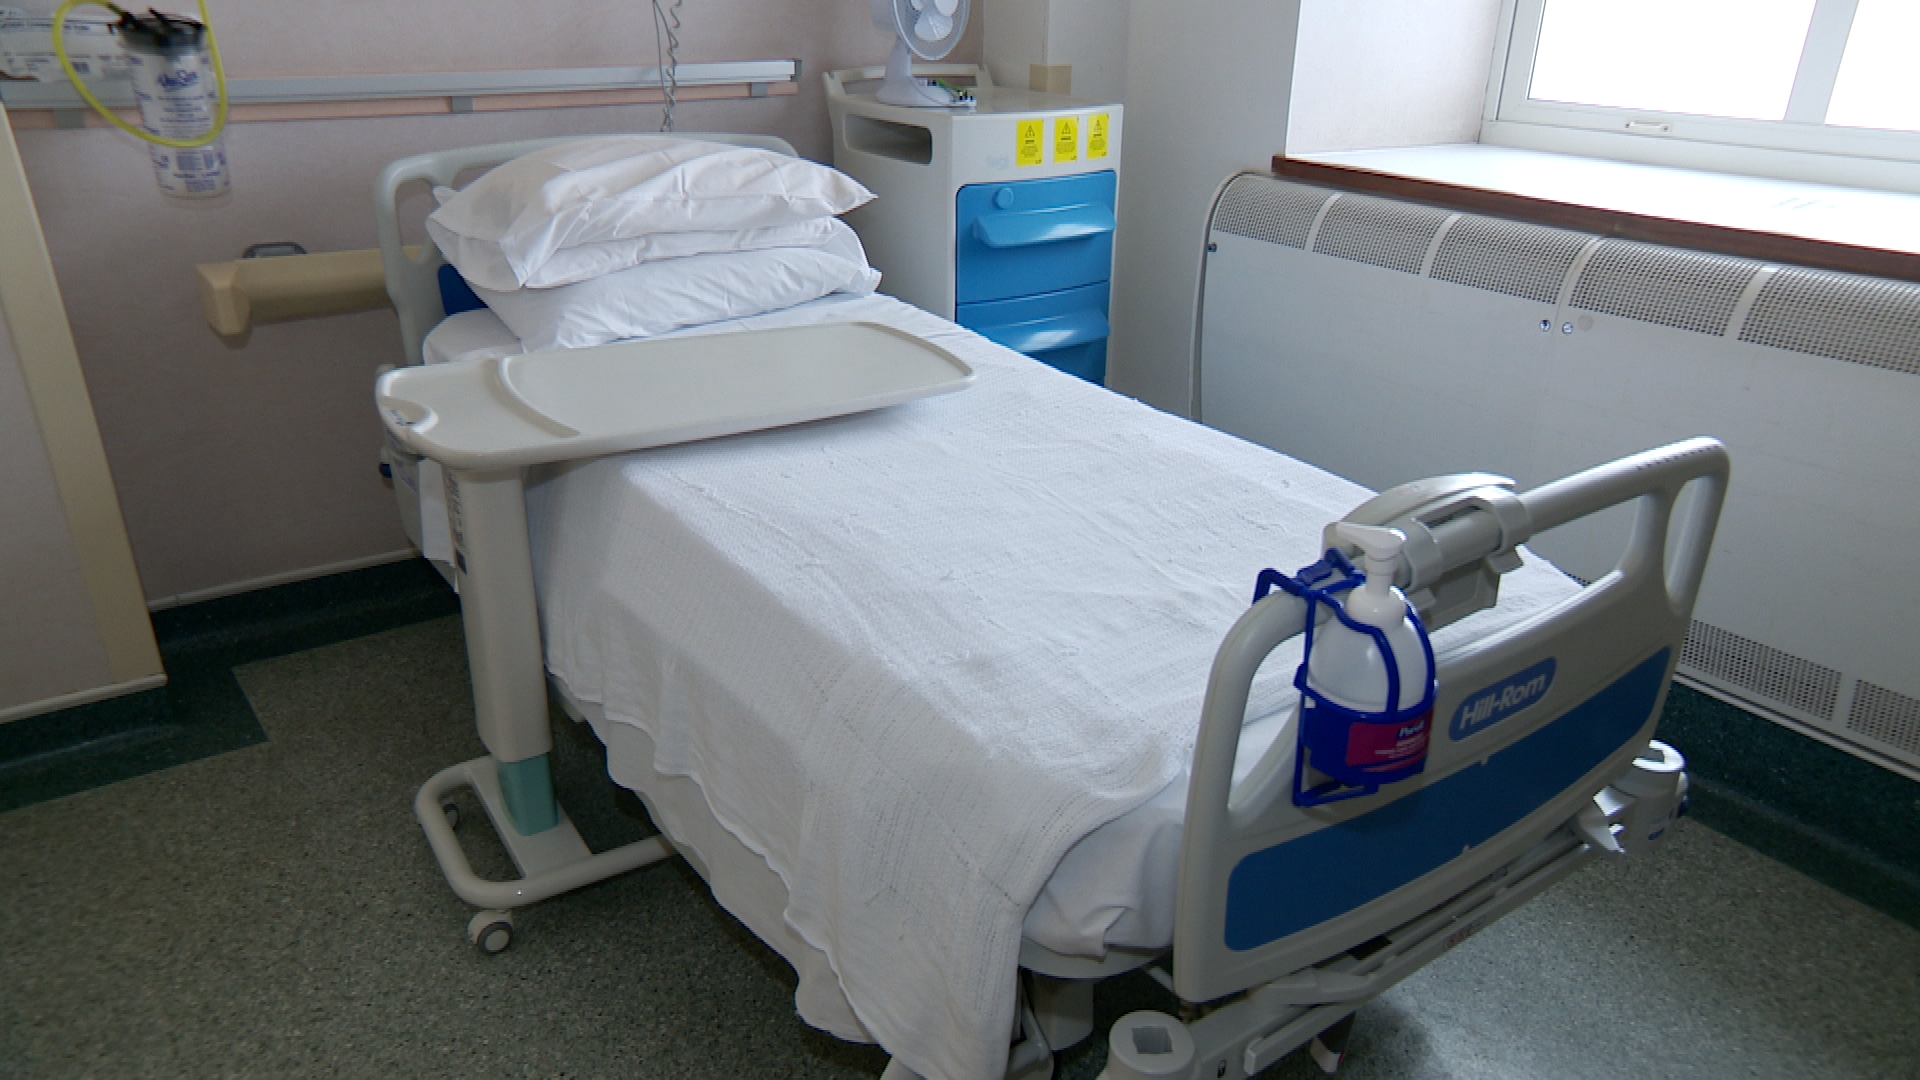 Hospital bed - Wikipedia